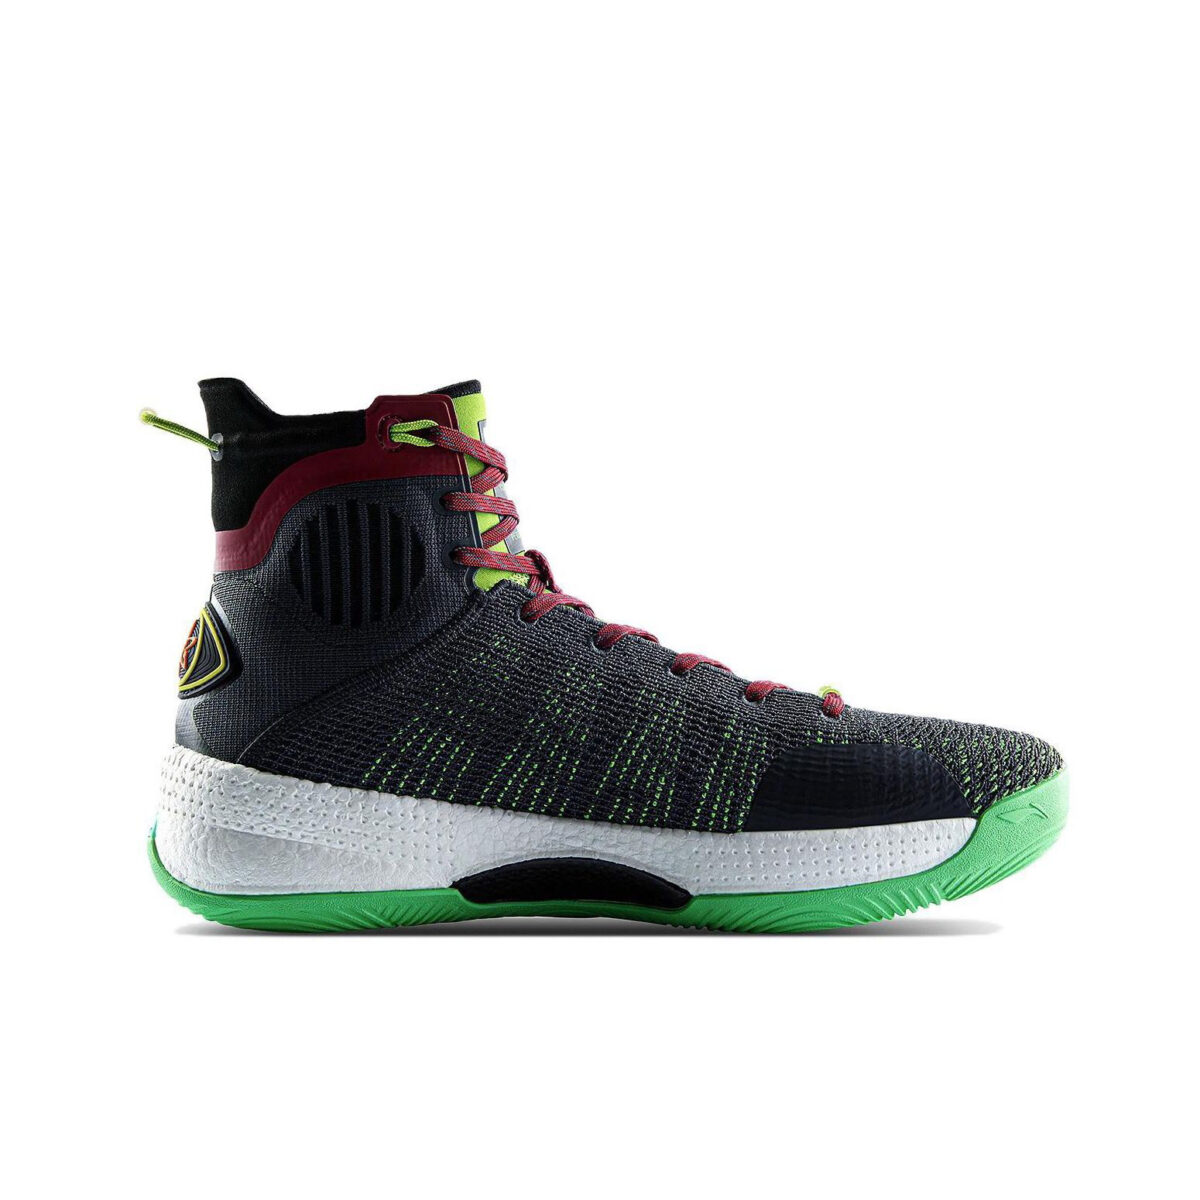 LiNing Yushuai 13 “Fusing Point” High Premium Boom Basketball Shoes ...